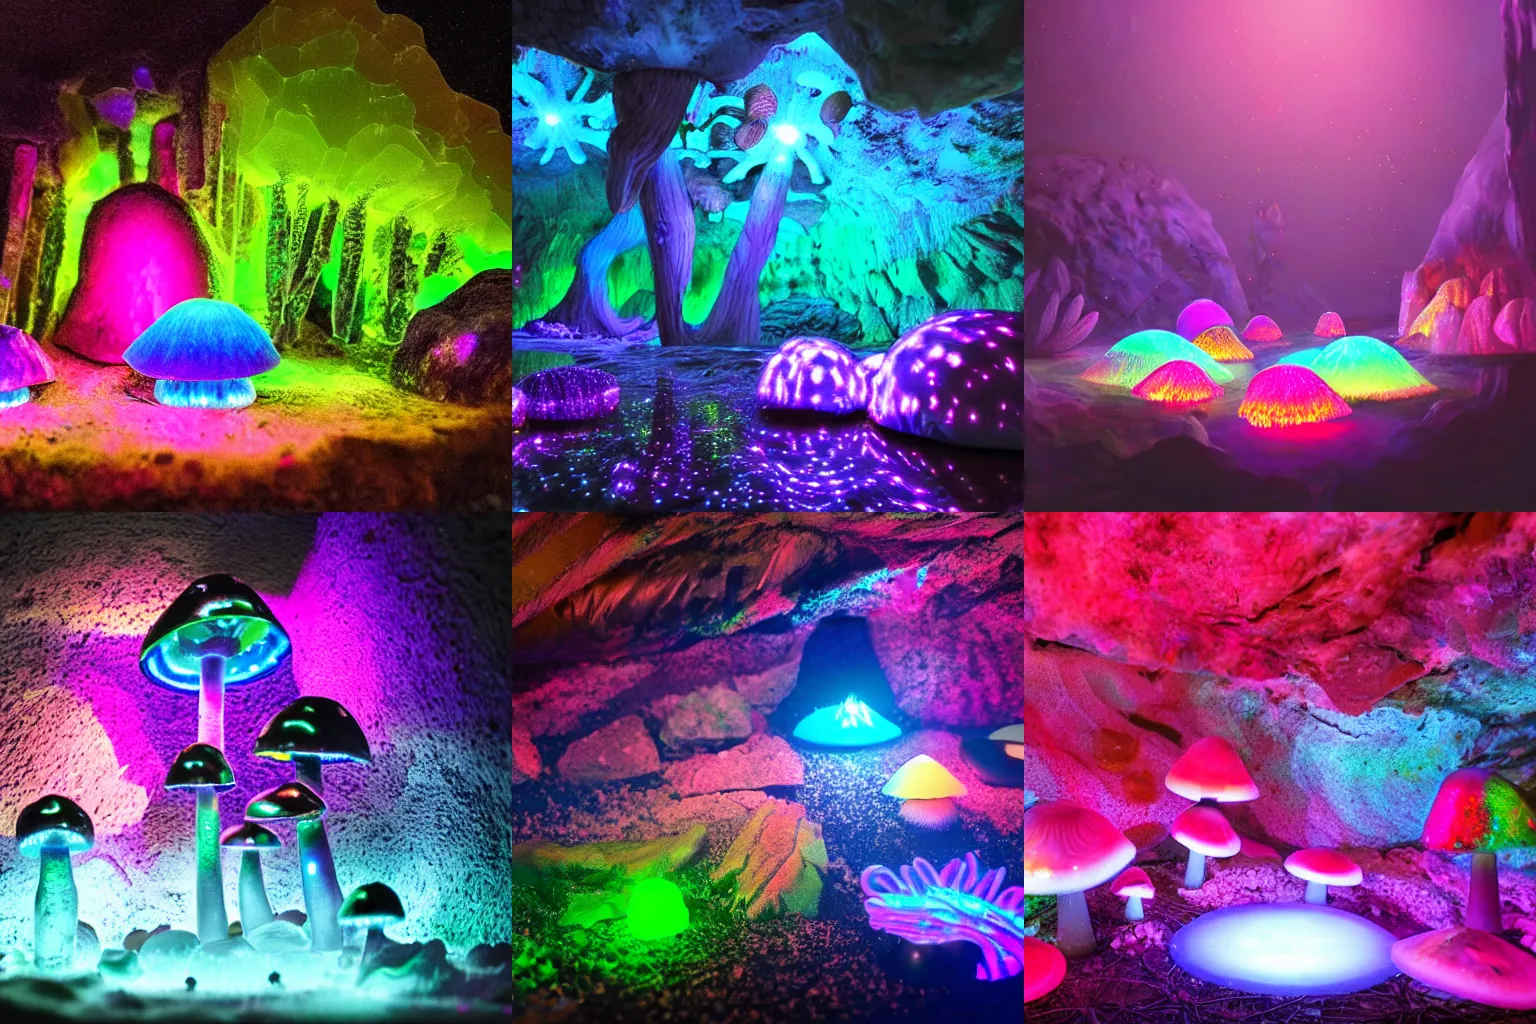 Prompt: dark cave, iridescent mushrooms, glowing crystals, neon, hyperrealistic